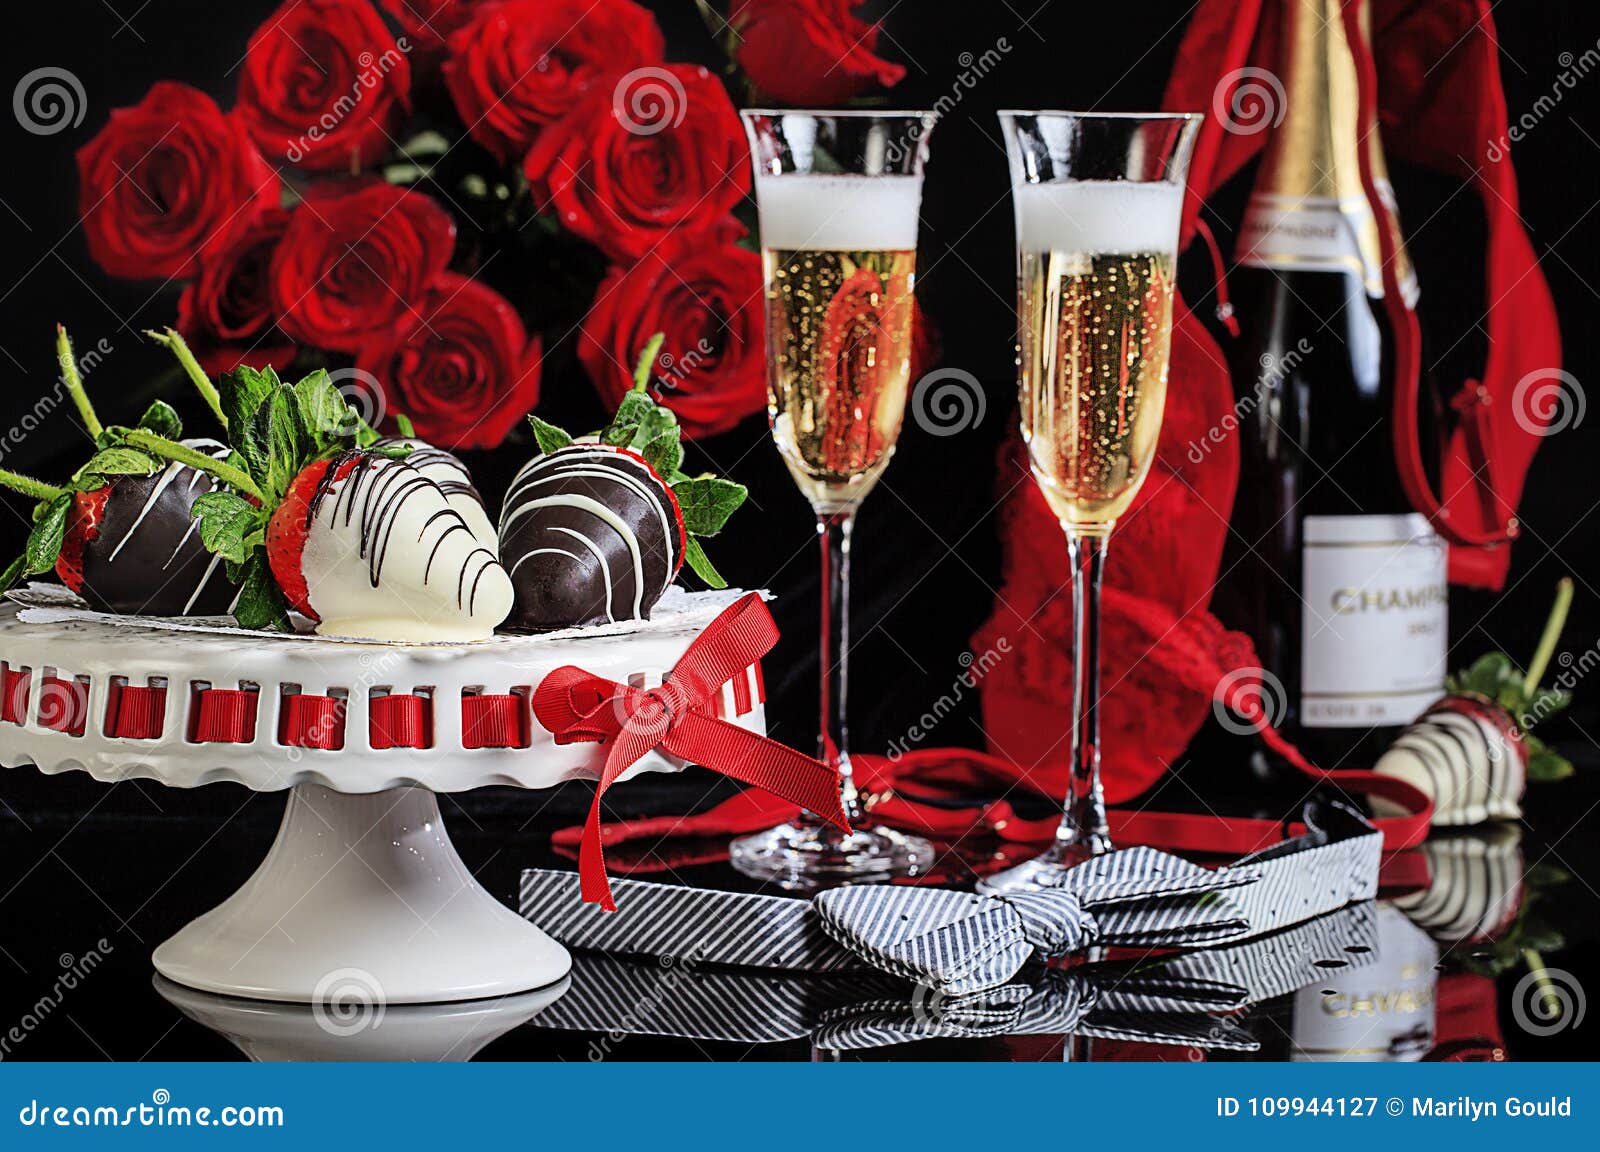 valentine champagne flutes roses lingerie